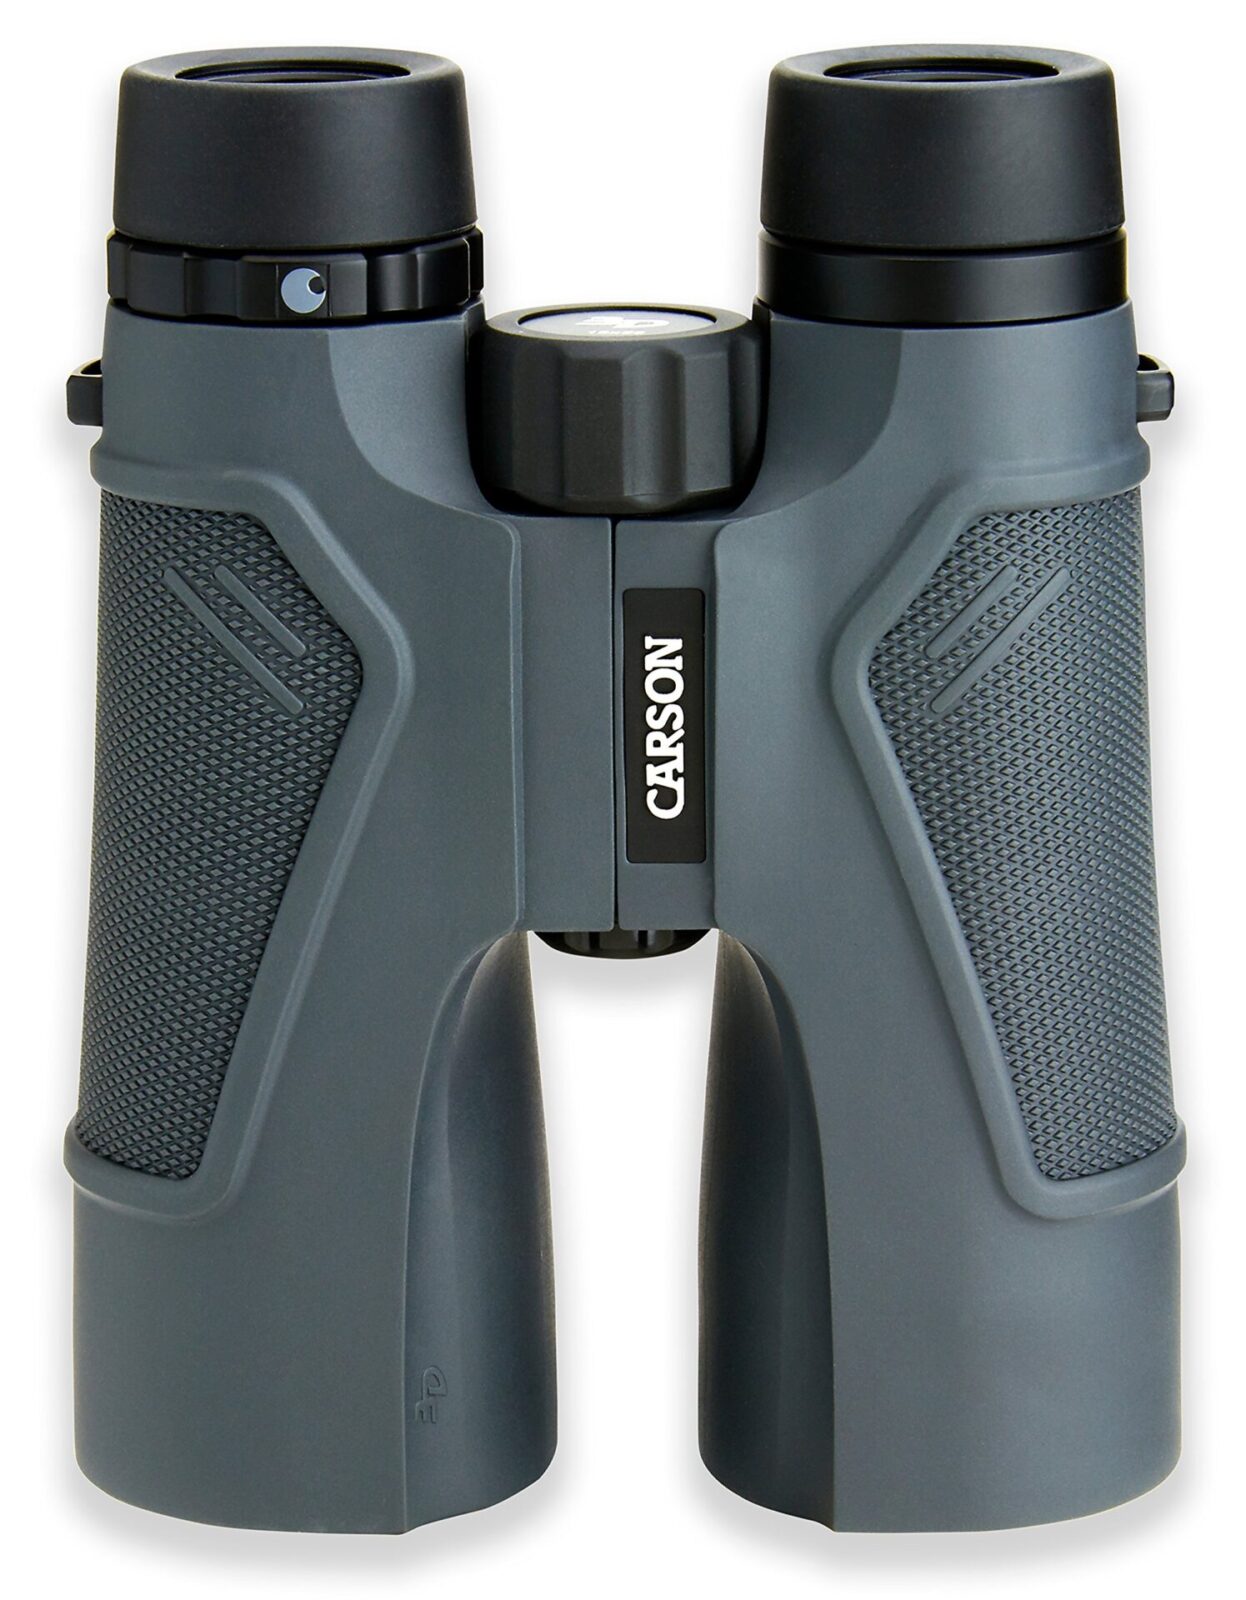 Carson® 3D Series 10x50mm Binocular with High Definition Optics